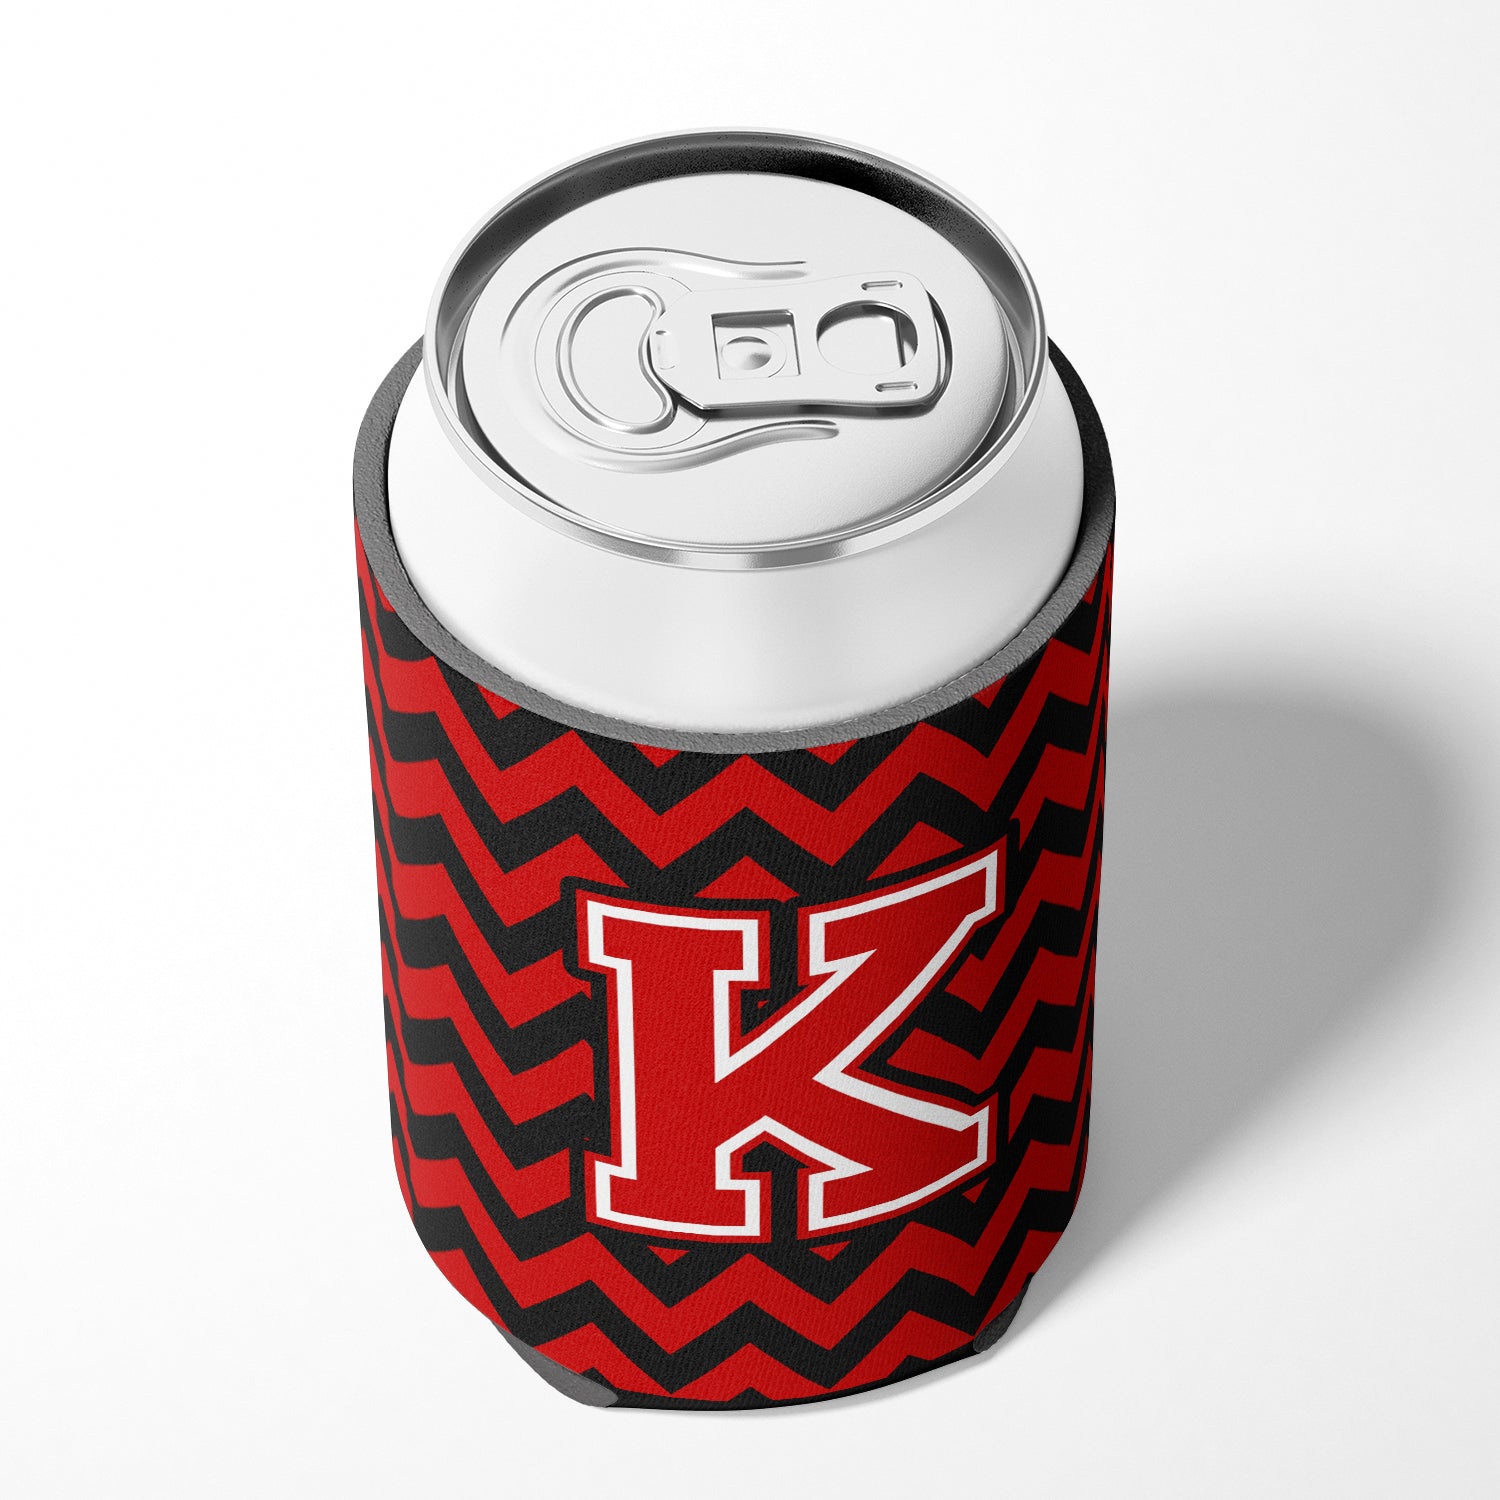 Letter K Chevron Black and Red   Can or Bottle Hugger CJ1047-KCC.